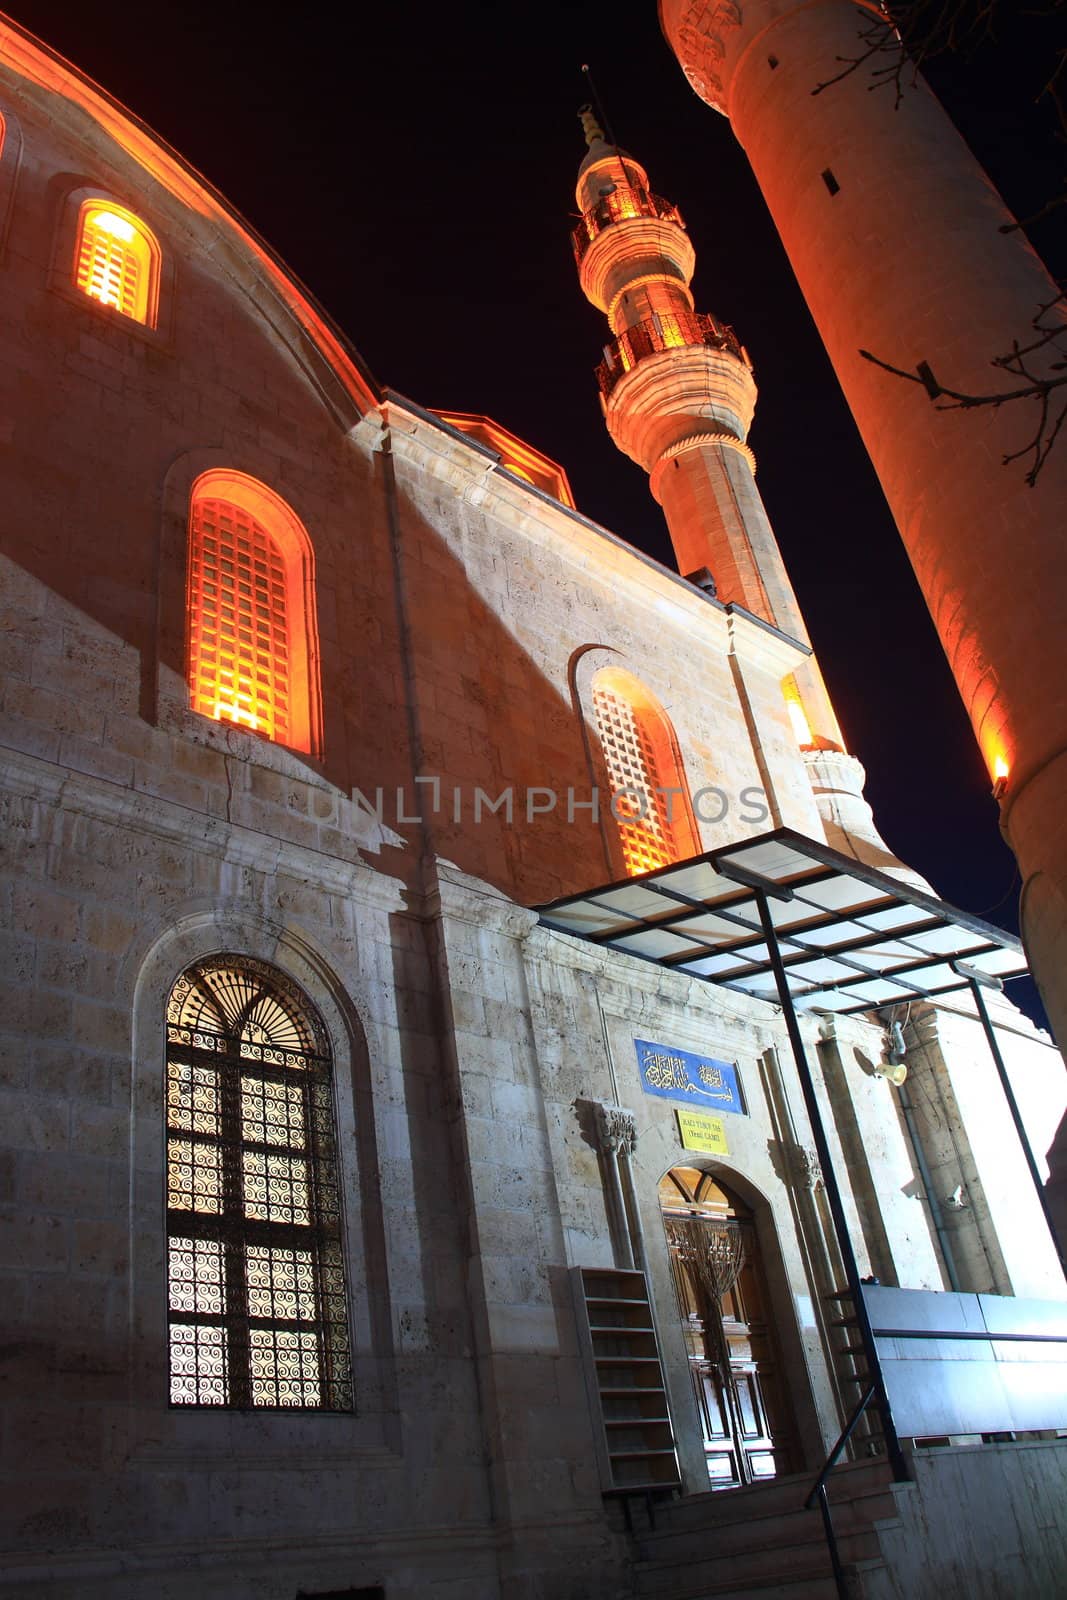 Yeni mosque in Malatya by mturhanlar